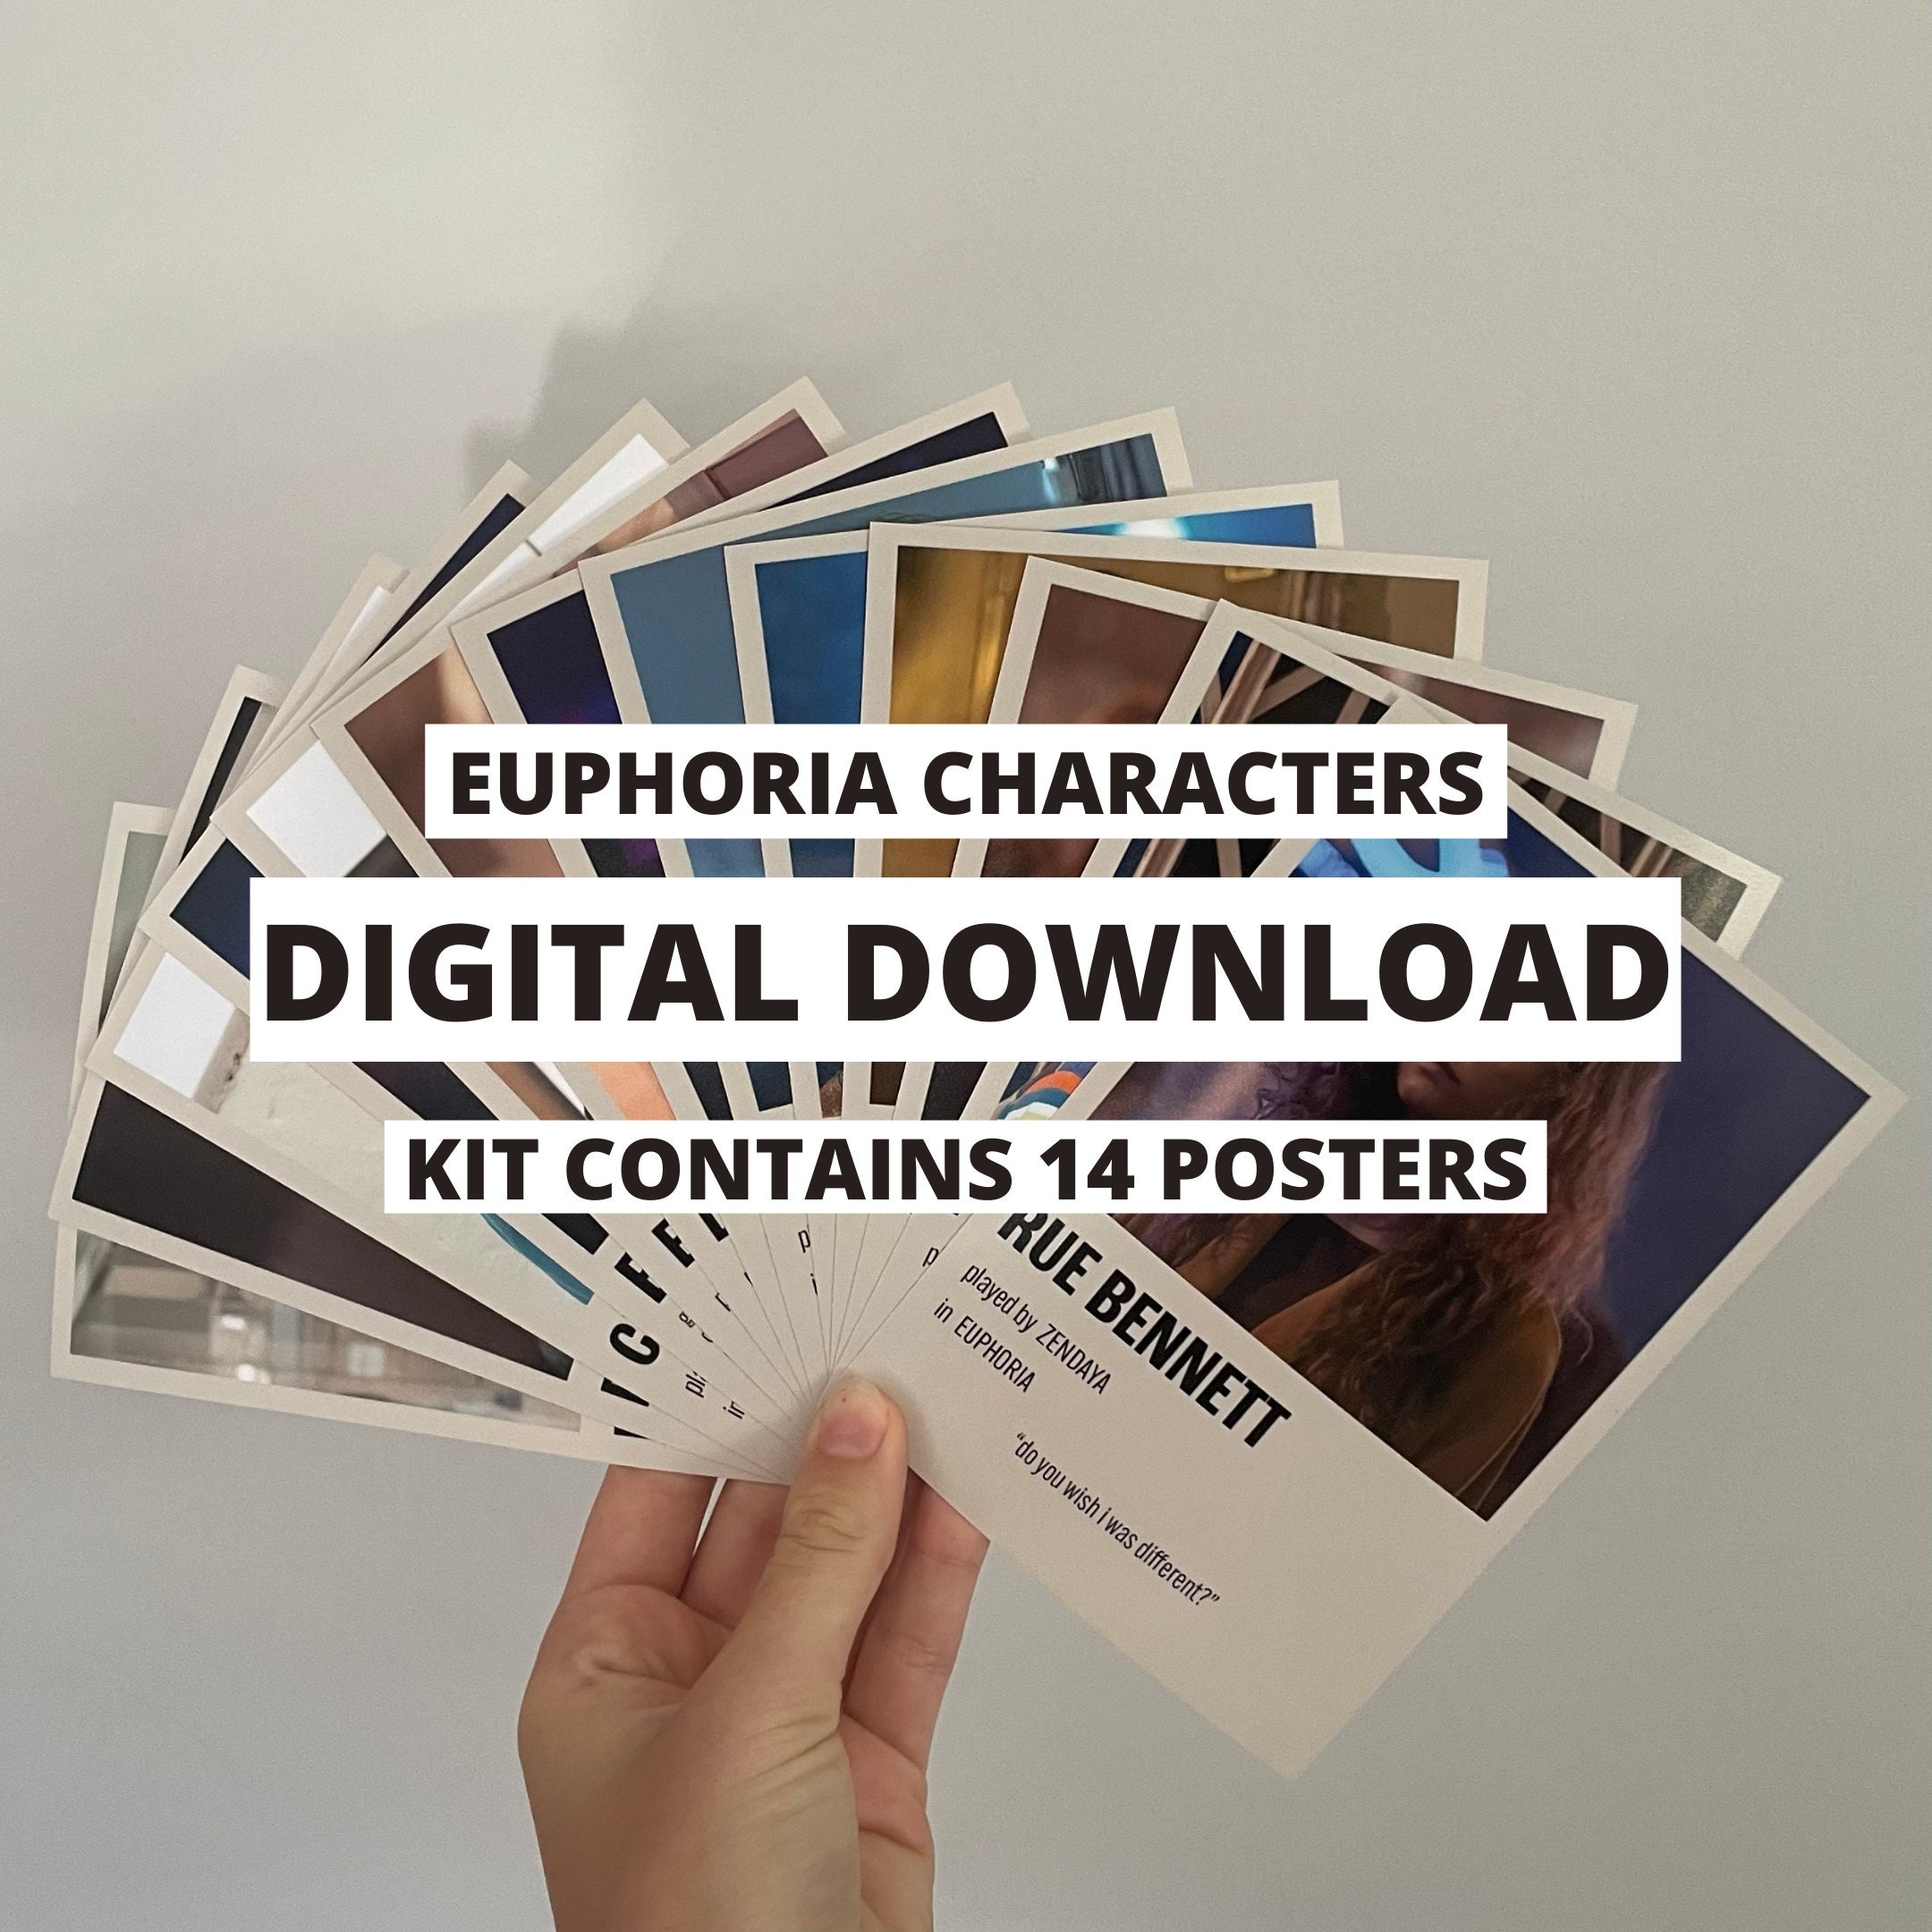 How to Buy Euphoria Character Looks